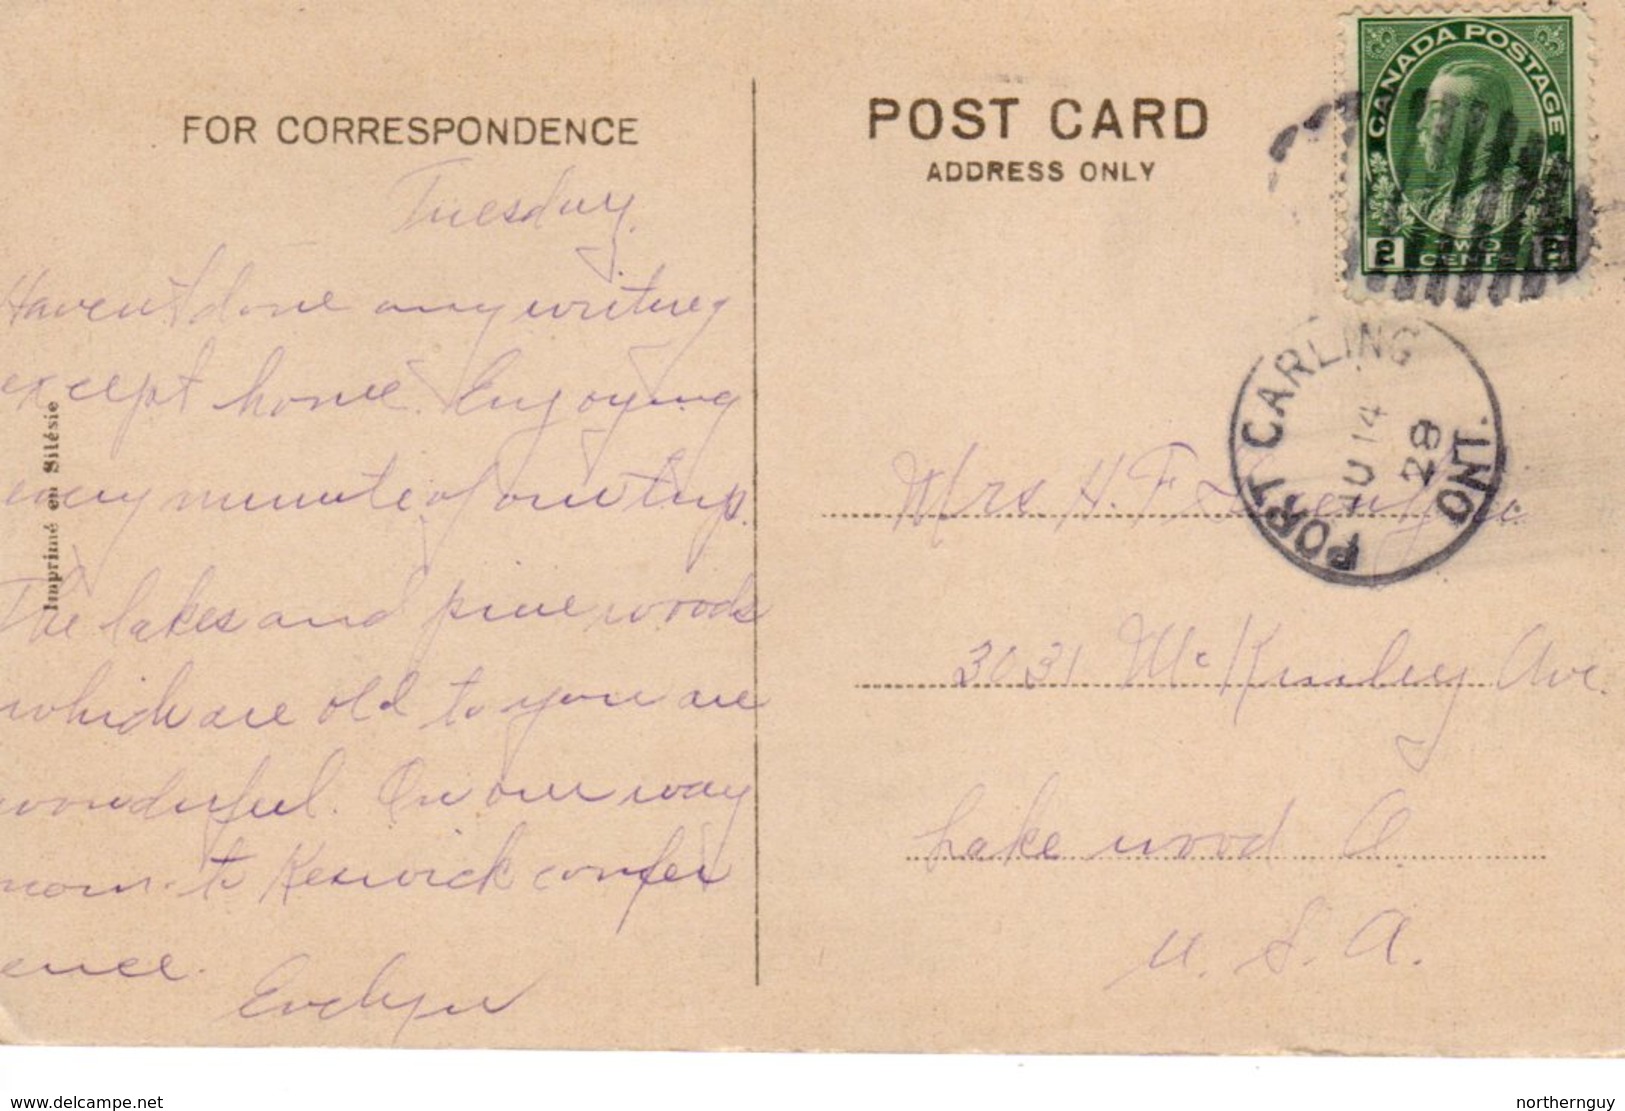 BALA, Ontario, Canada, Presbyterian Church, 1928 Anderson Postcard, MuskokaCcounty - Muskoka